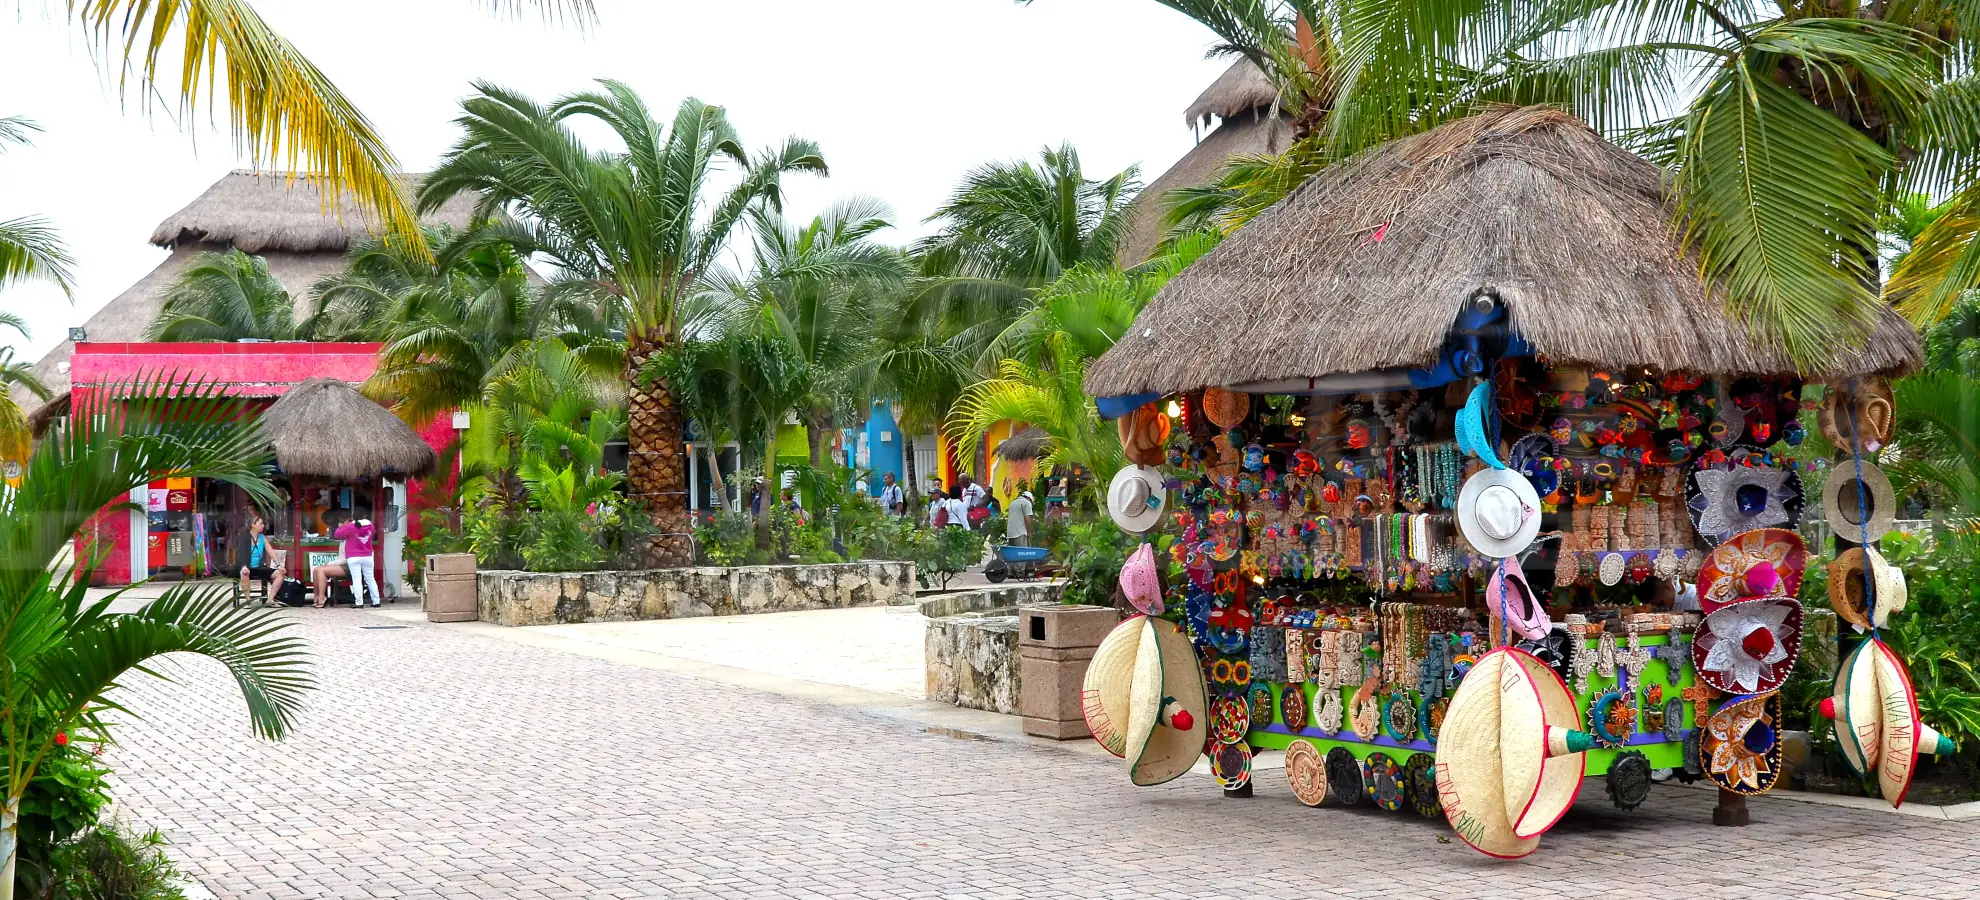 Tropical shopping plaza at Puerto Maya in Cozumel, Mexico